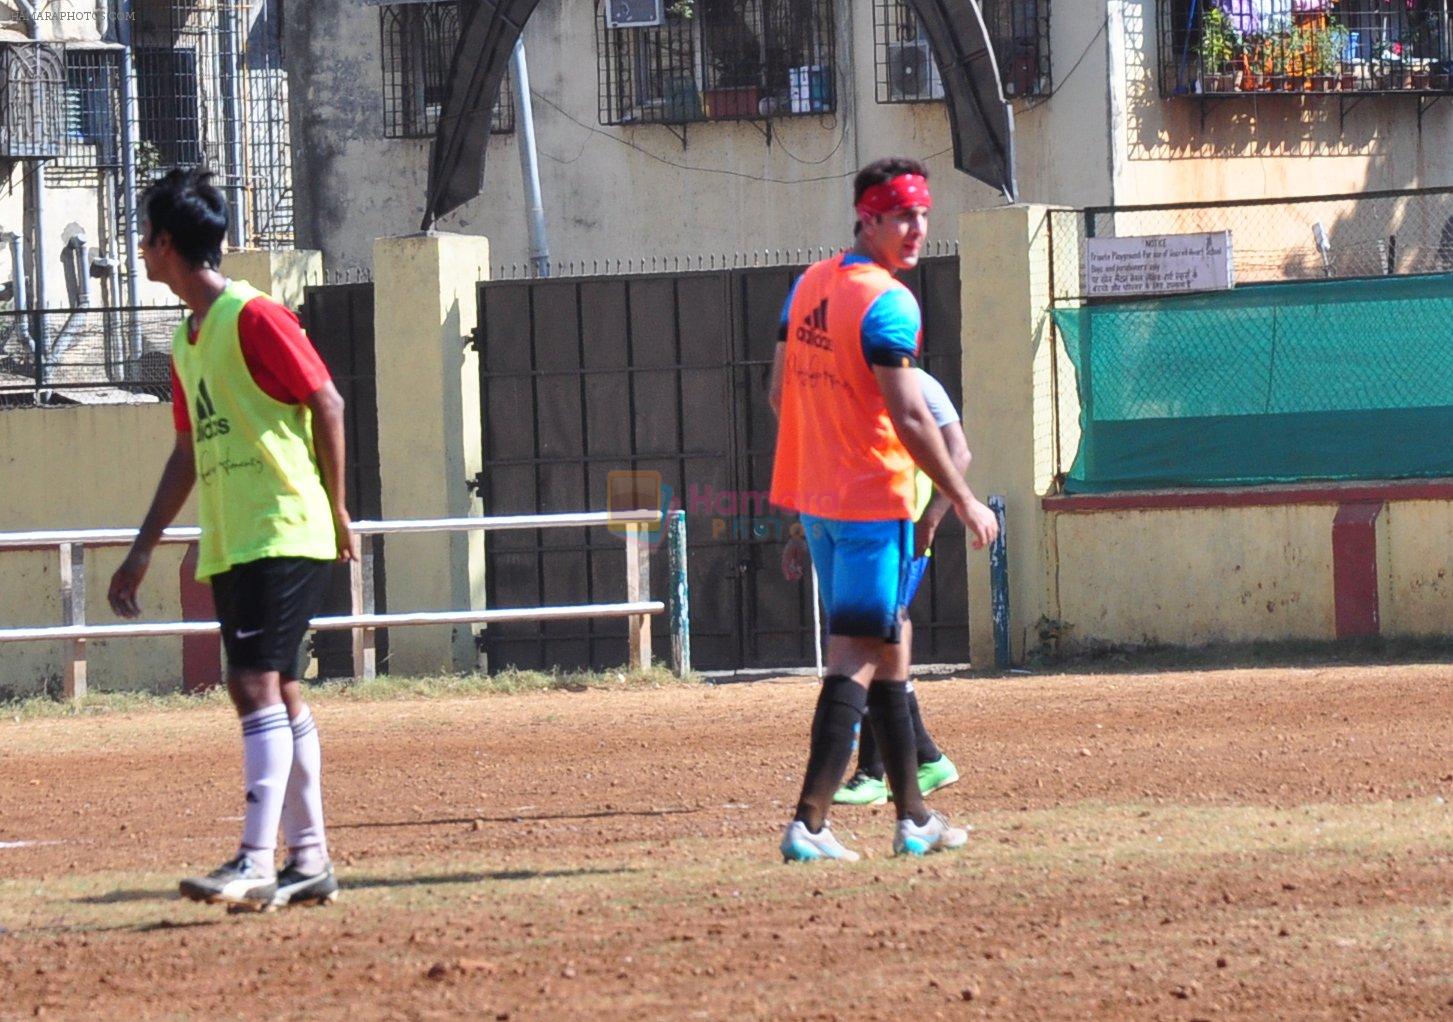 Ranbir Kapoor snapped playing Football on 7th Feb 2016